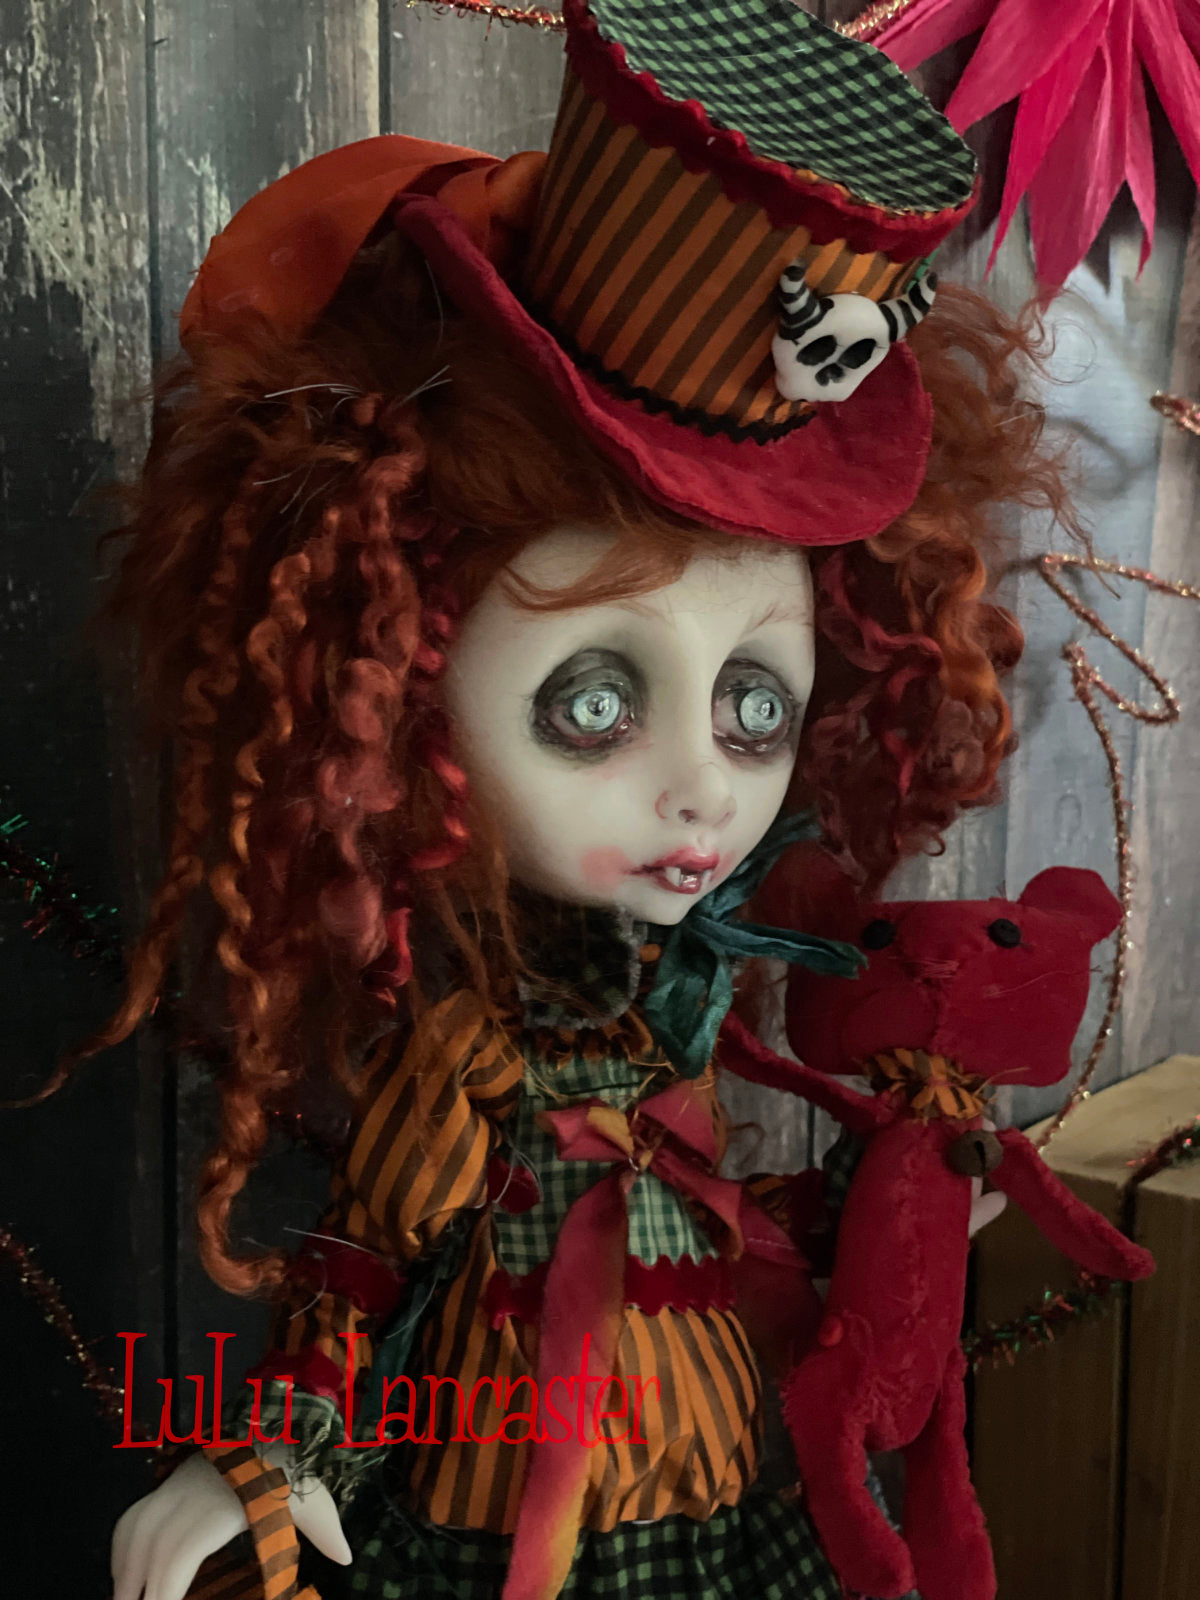 Andelilah The Creepmas Vampire Christmas winter Original LuLu Lancaster Art Doll